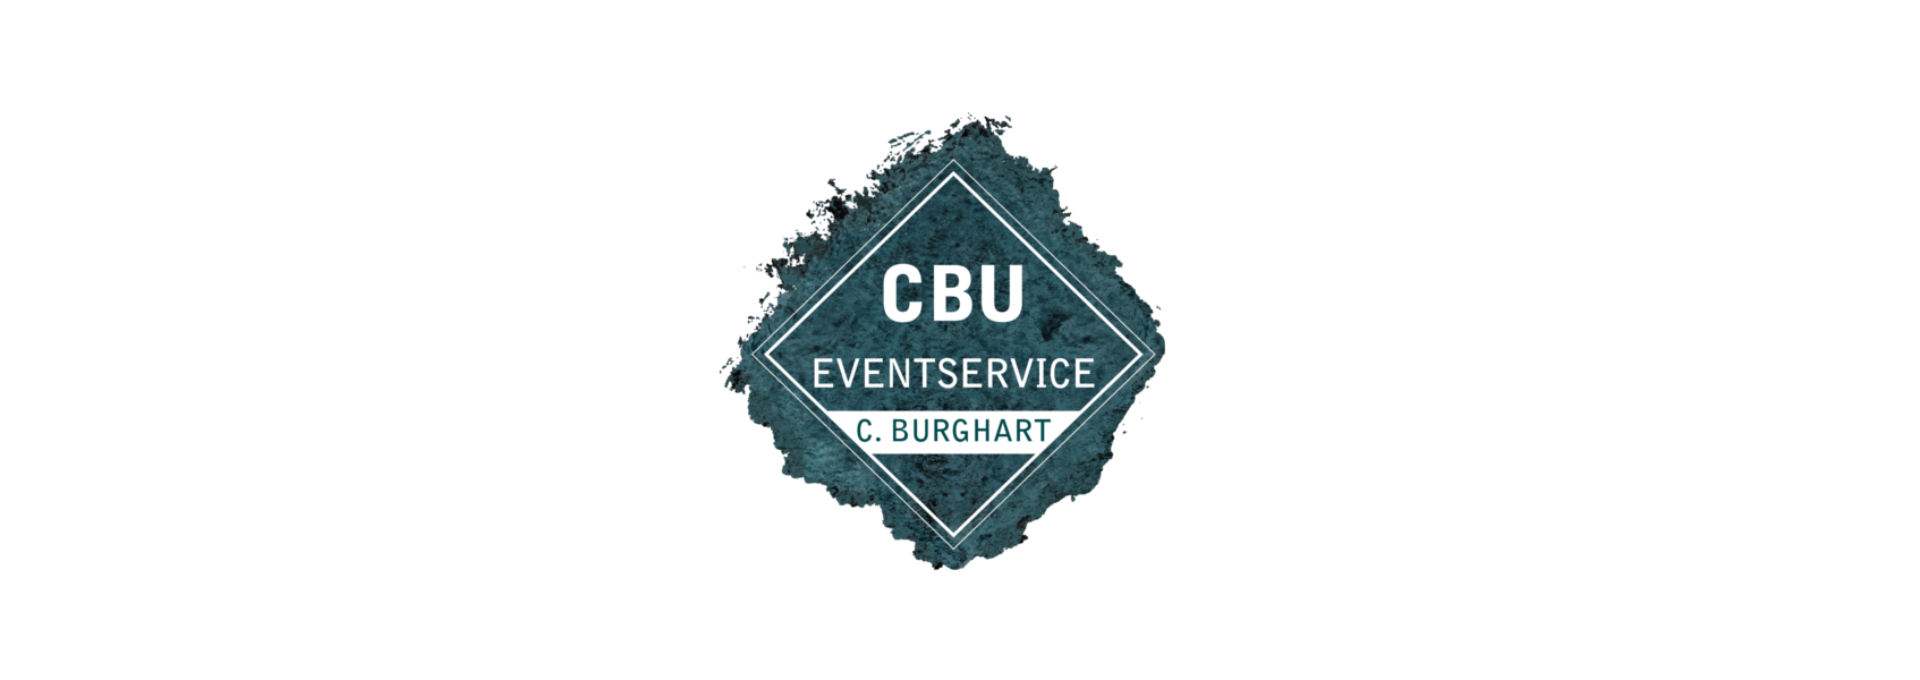 CBU EVENTSERVICE